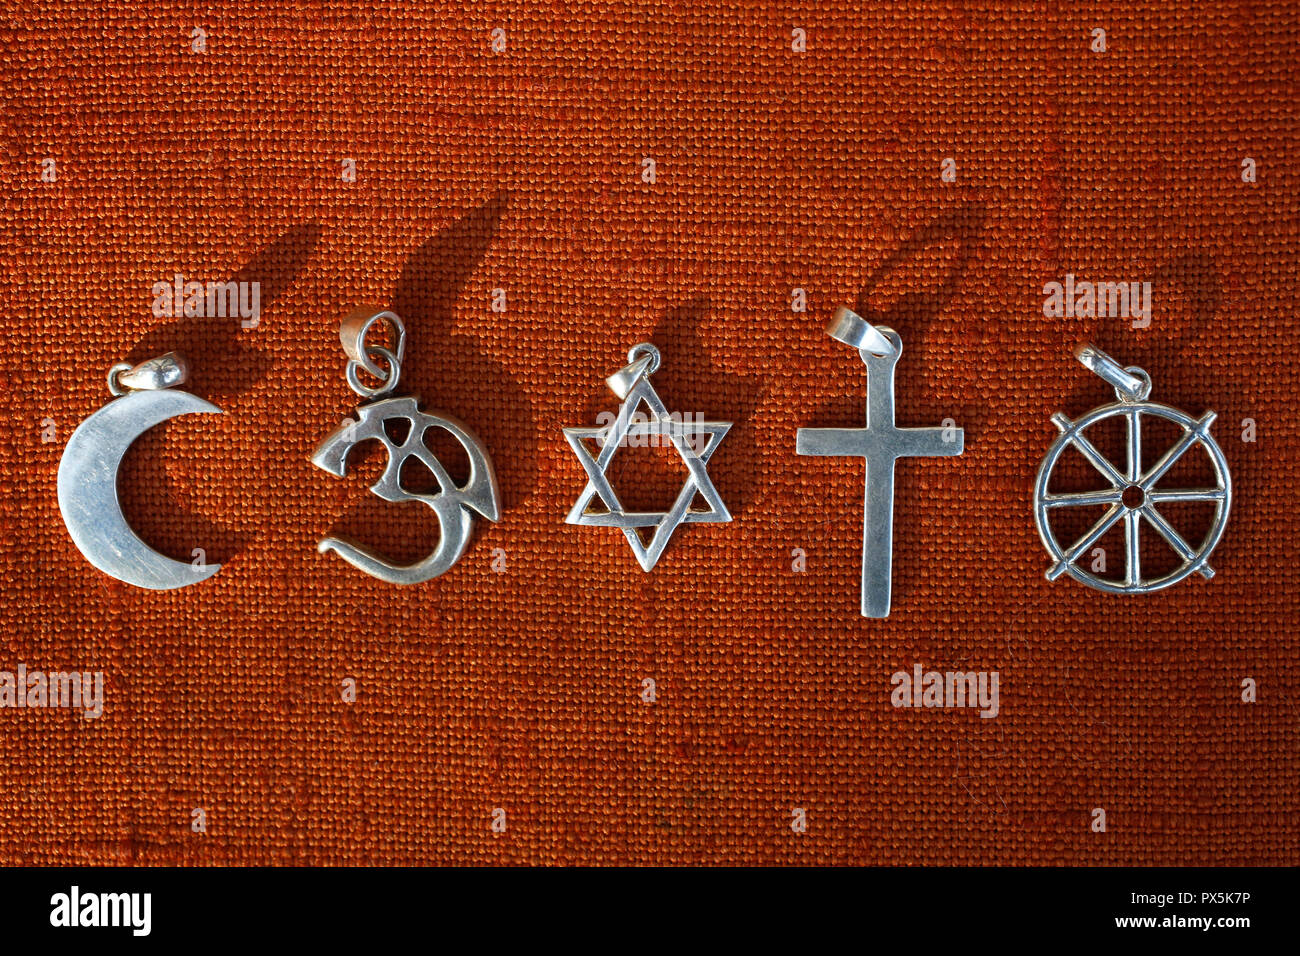 Symbols of 5 religions. France. Stock Photo